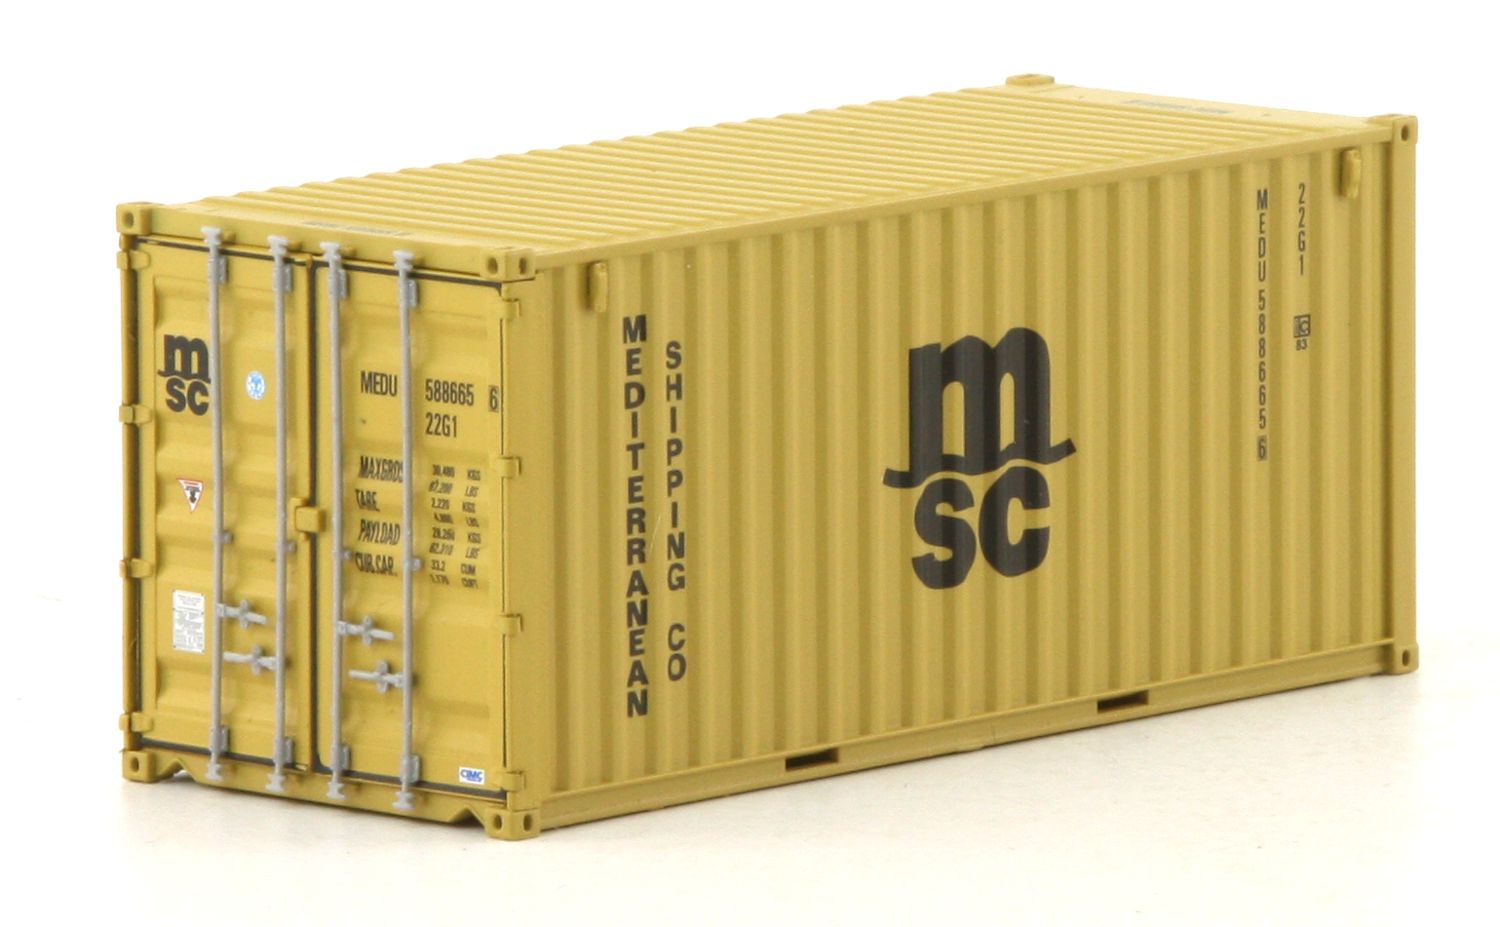 PT-Trains 820001.2 - Container 20' 'MSC', MEDU5886656